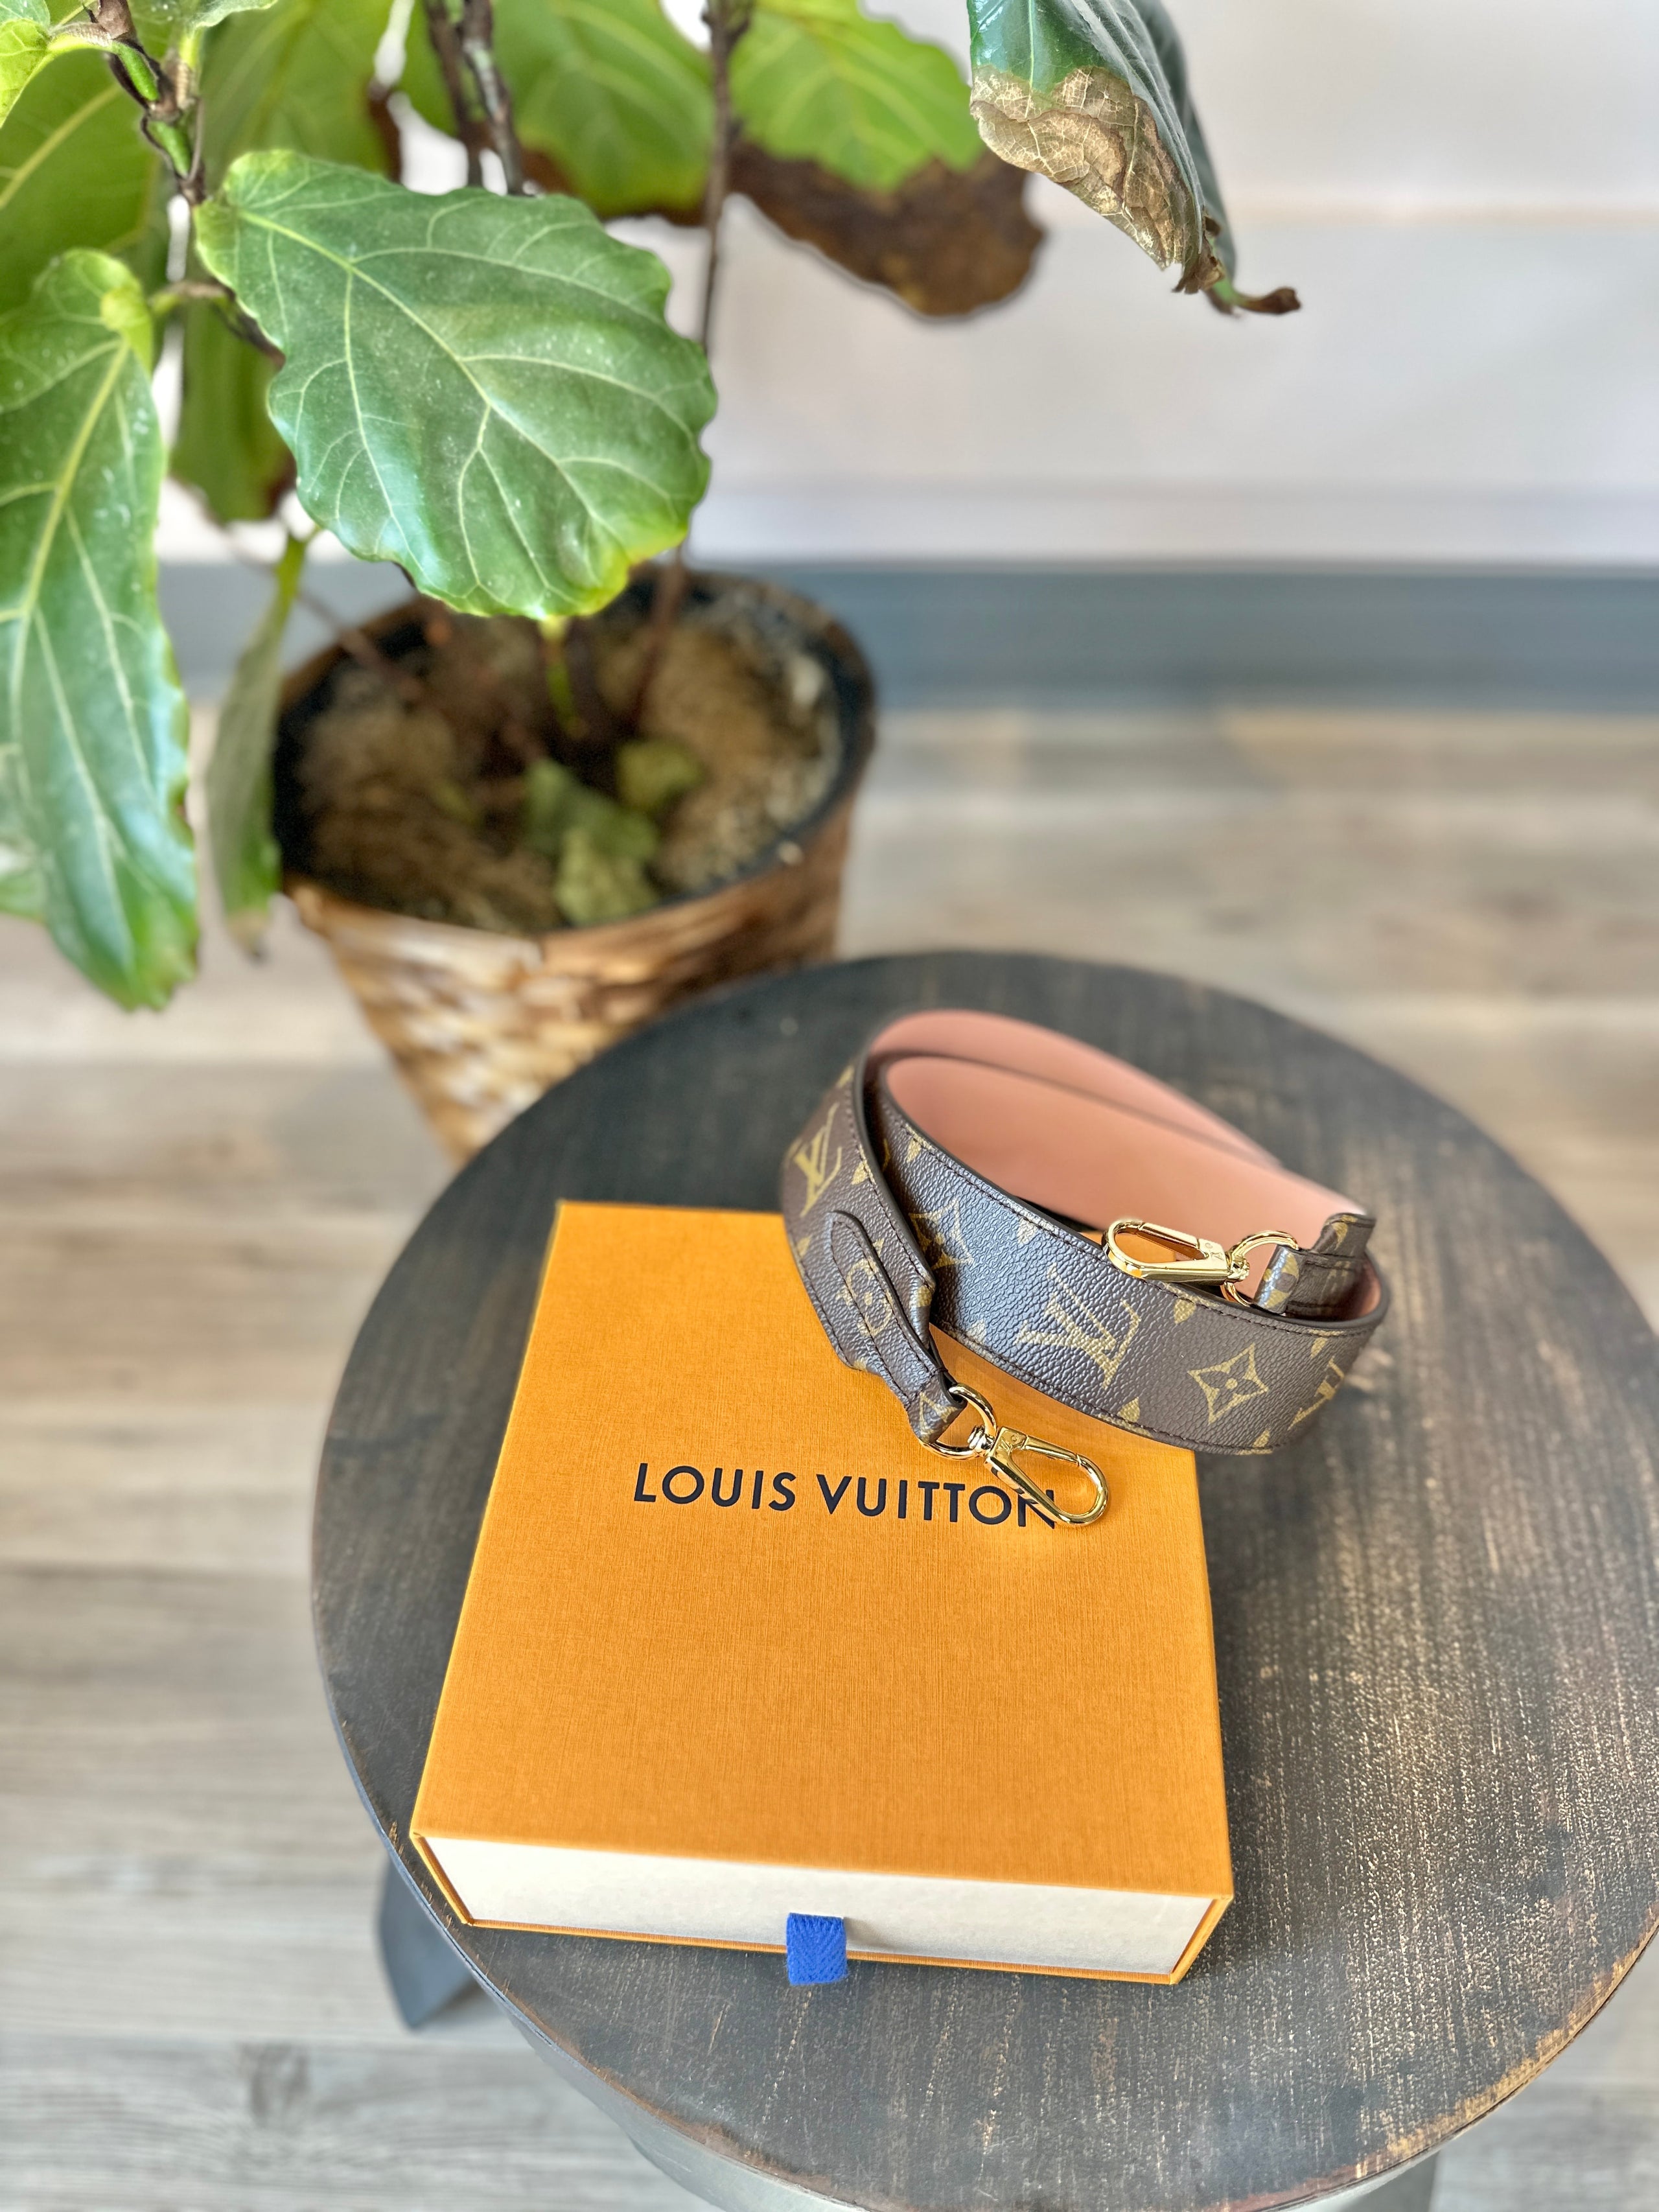 Louis Vuitton, Other, Louis Vuitton Belt Box And Shopping Bag